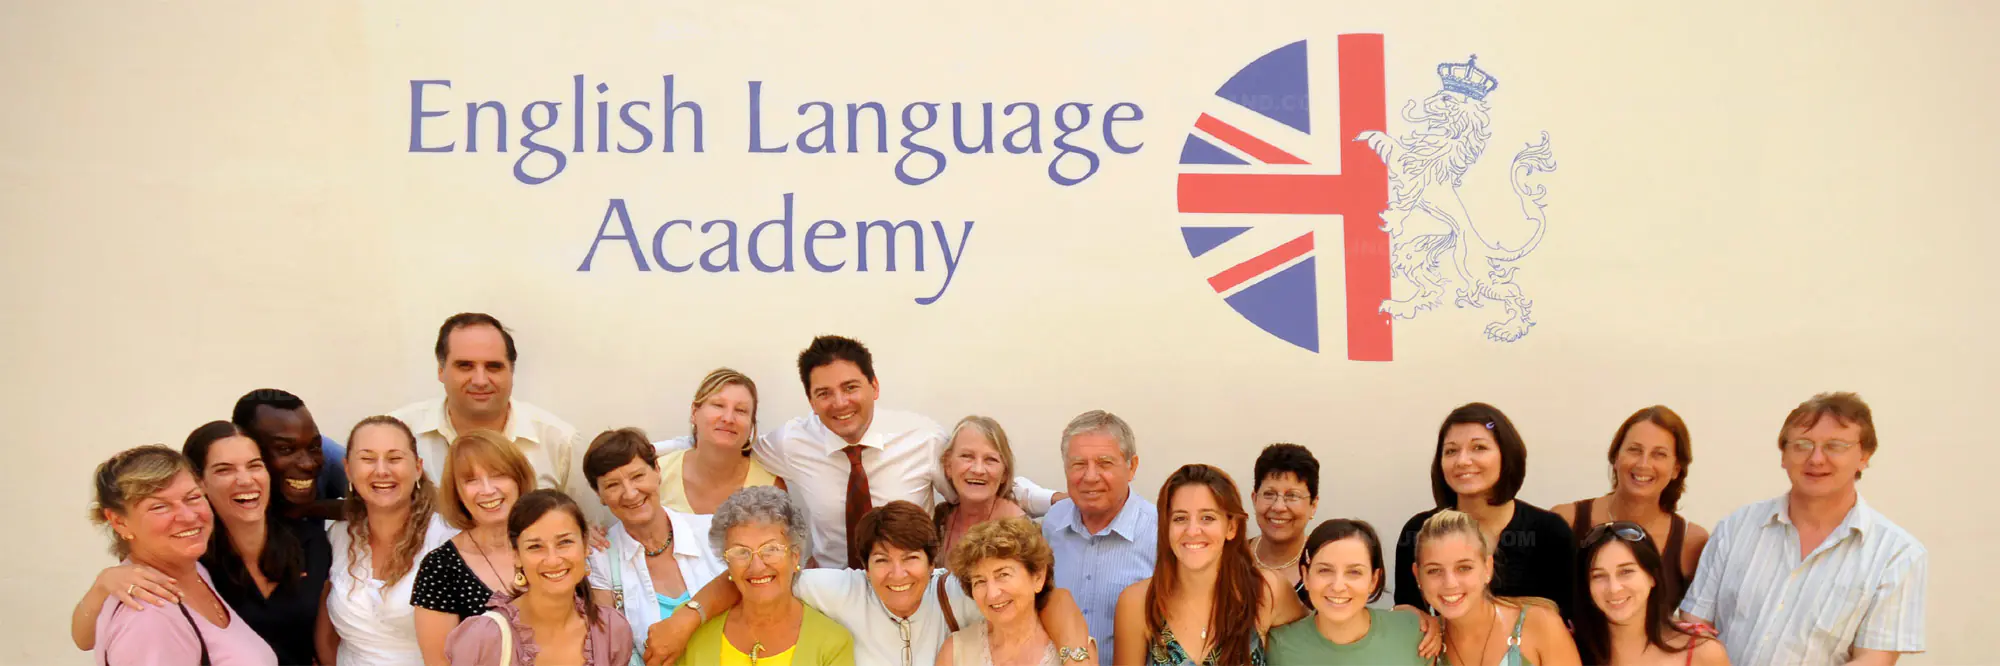 Cours English Language Academy, dates et tarifs